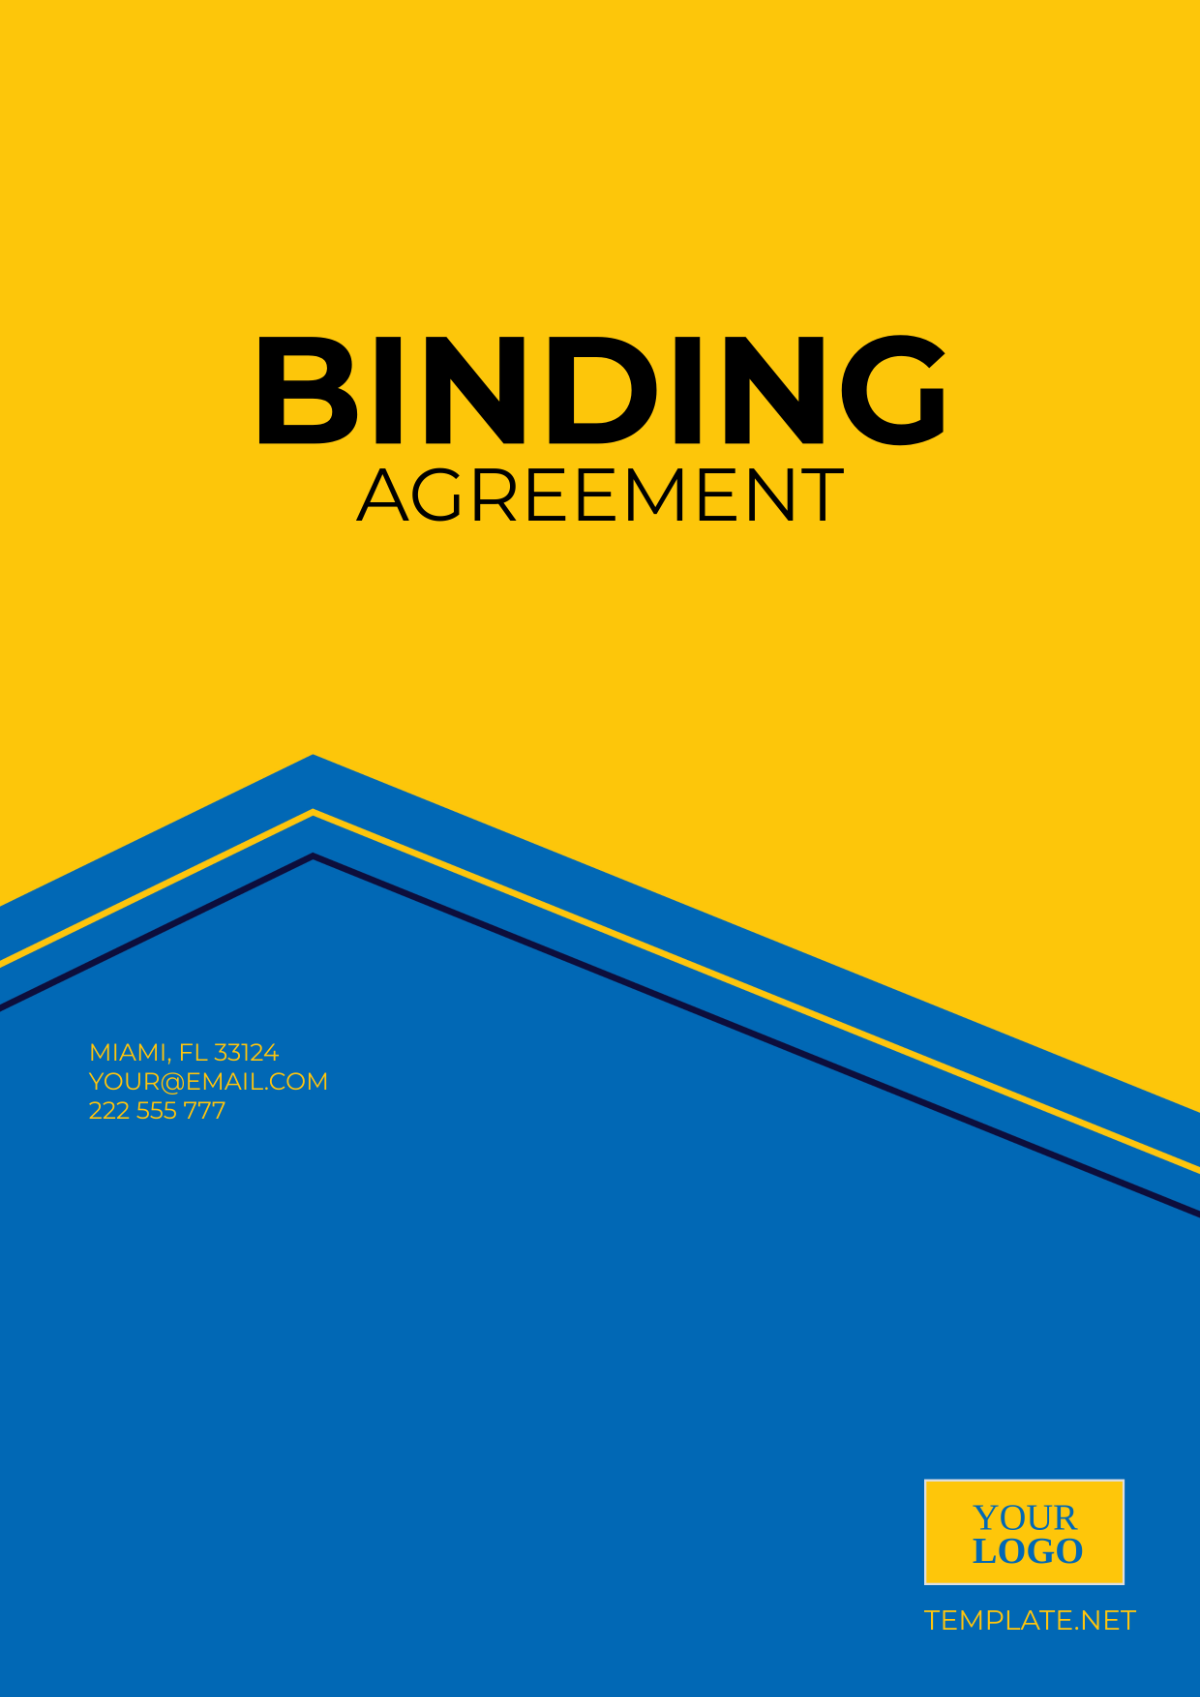 Binding Agreement Template